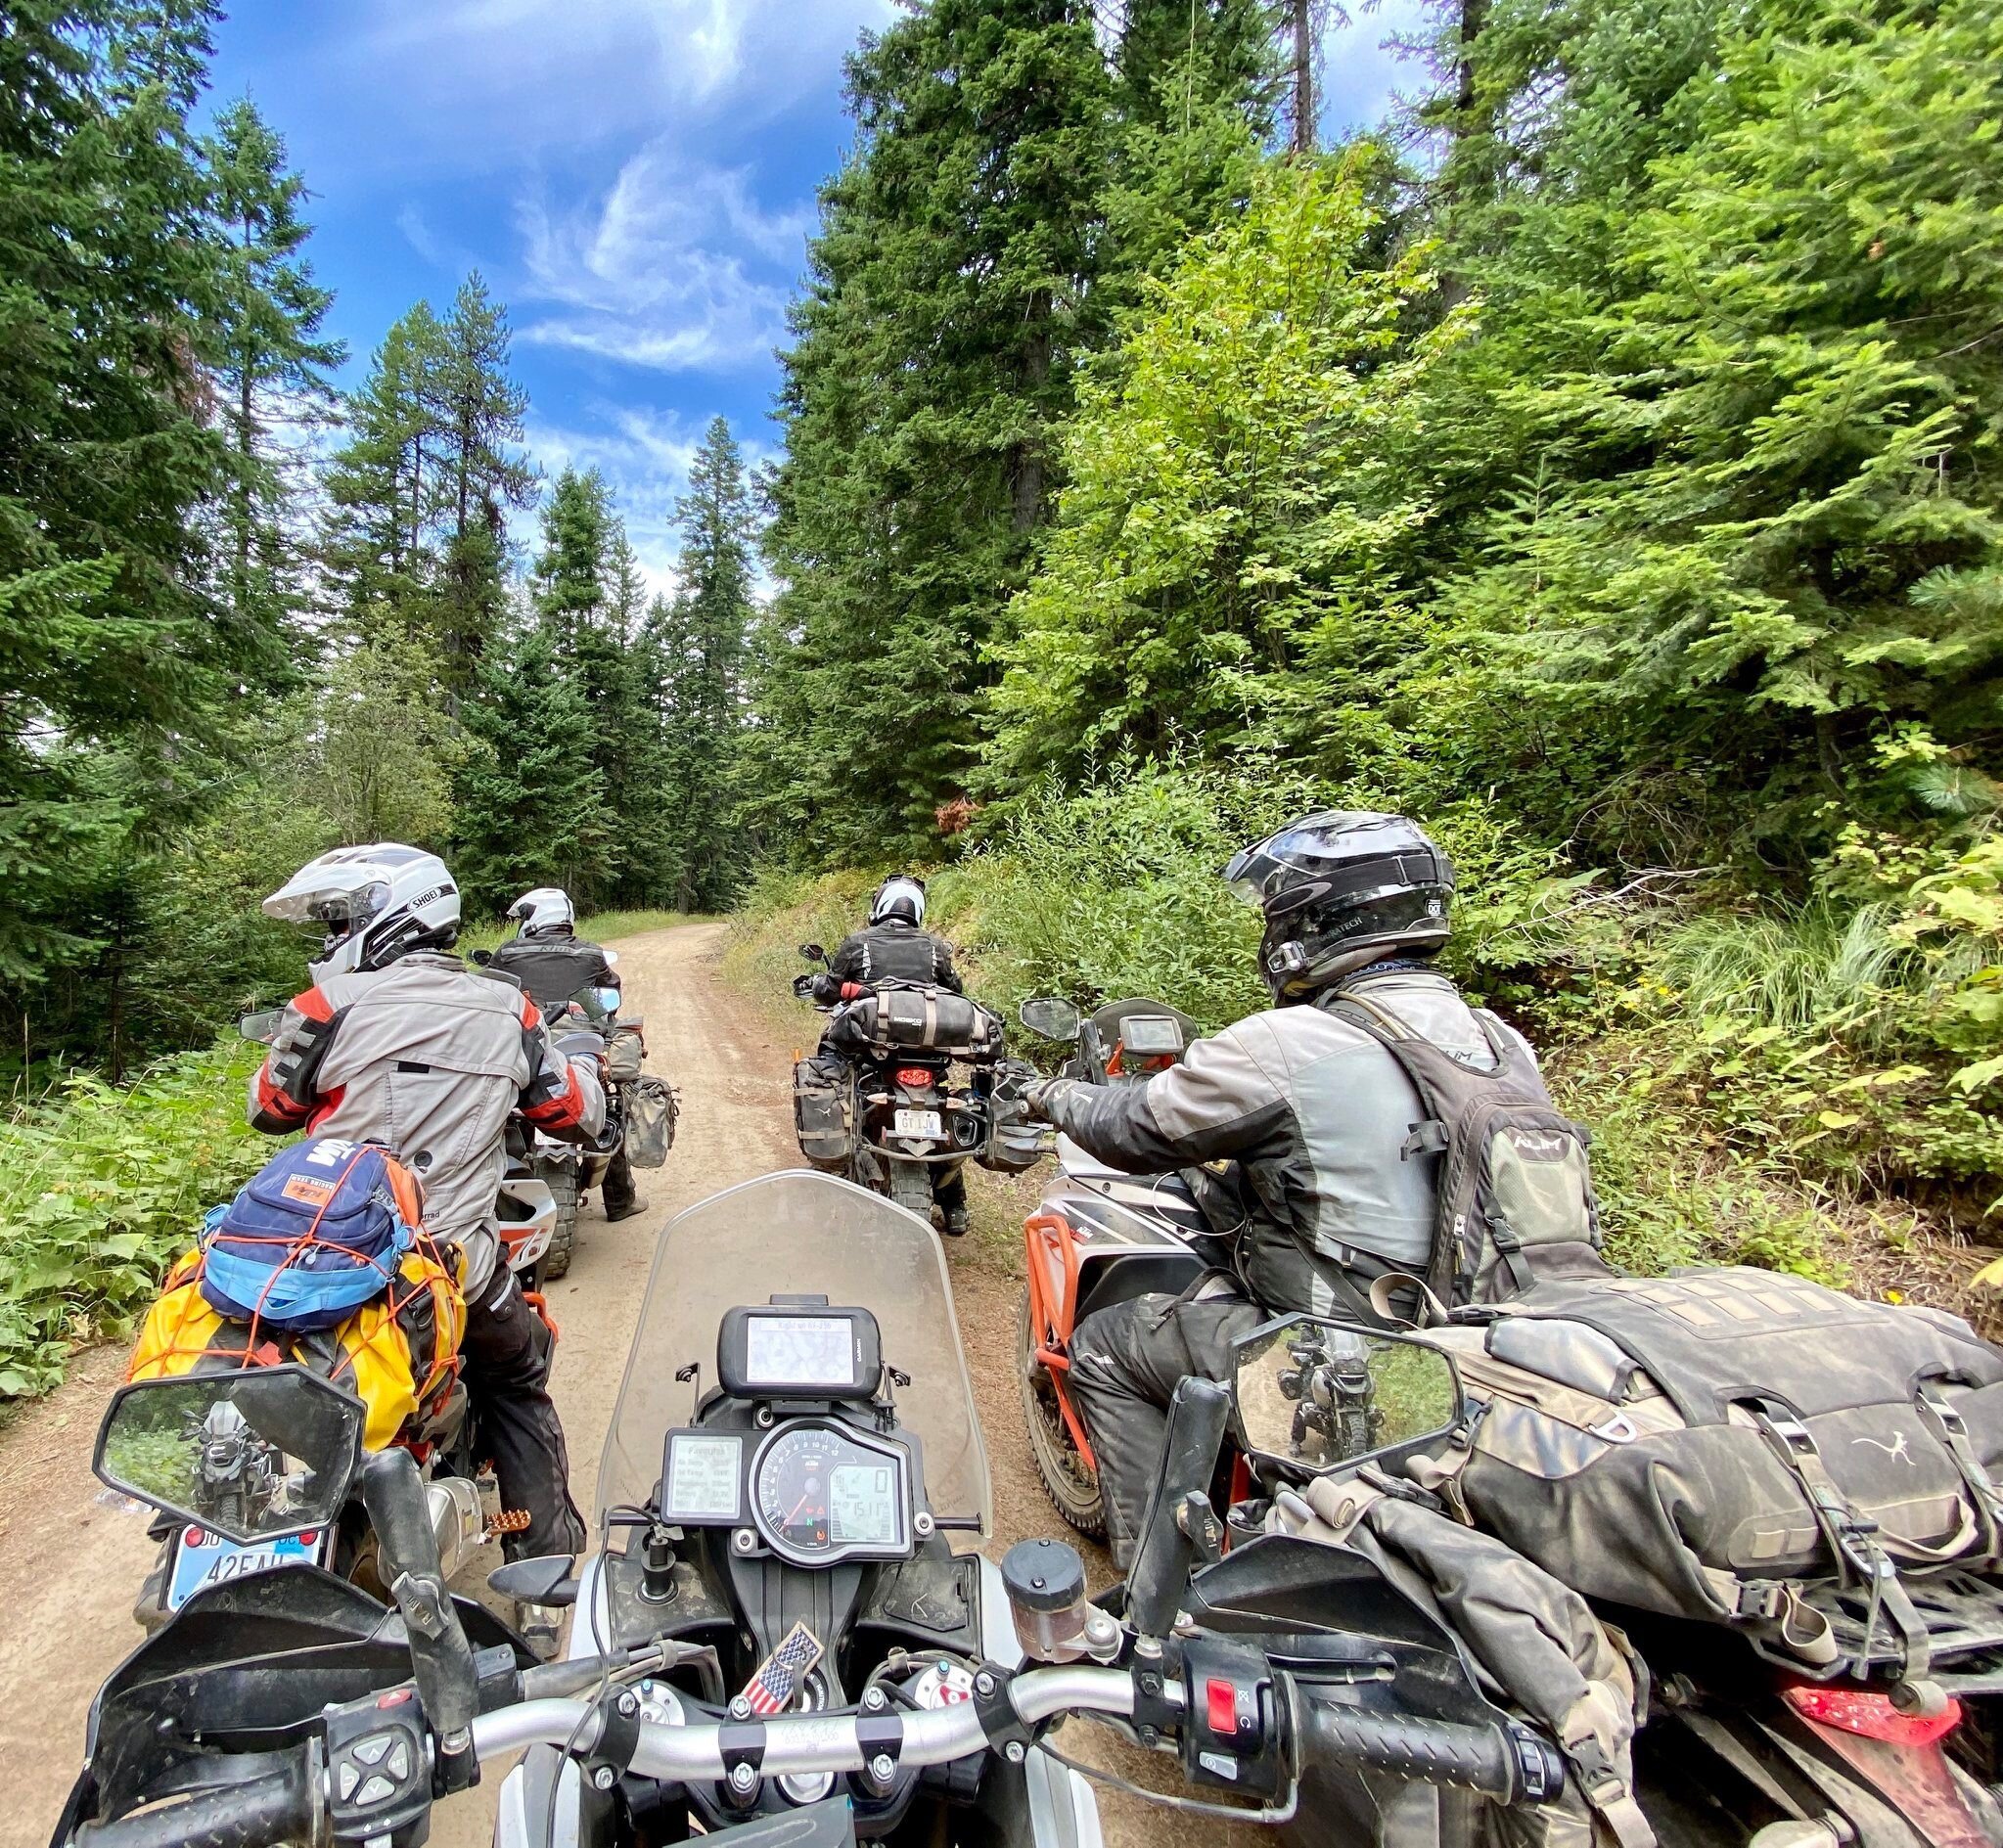 adventure motorcycle tours